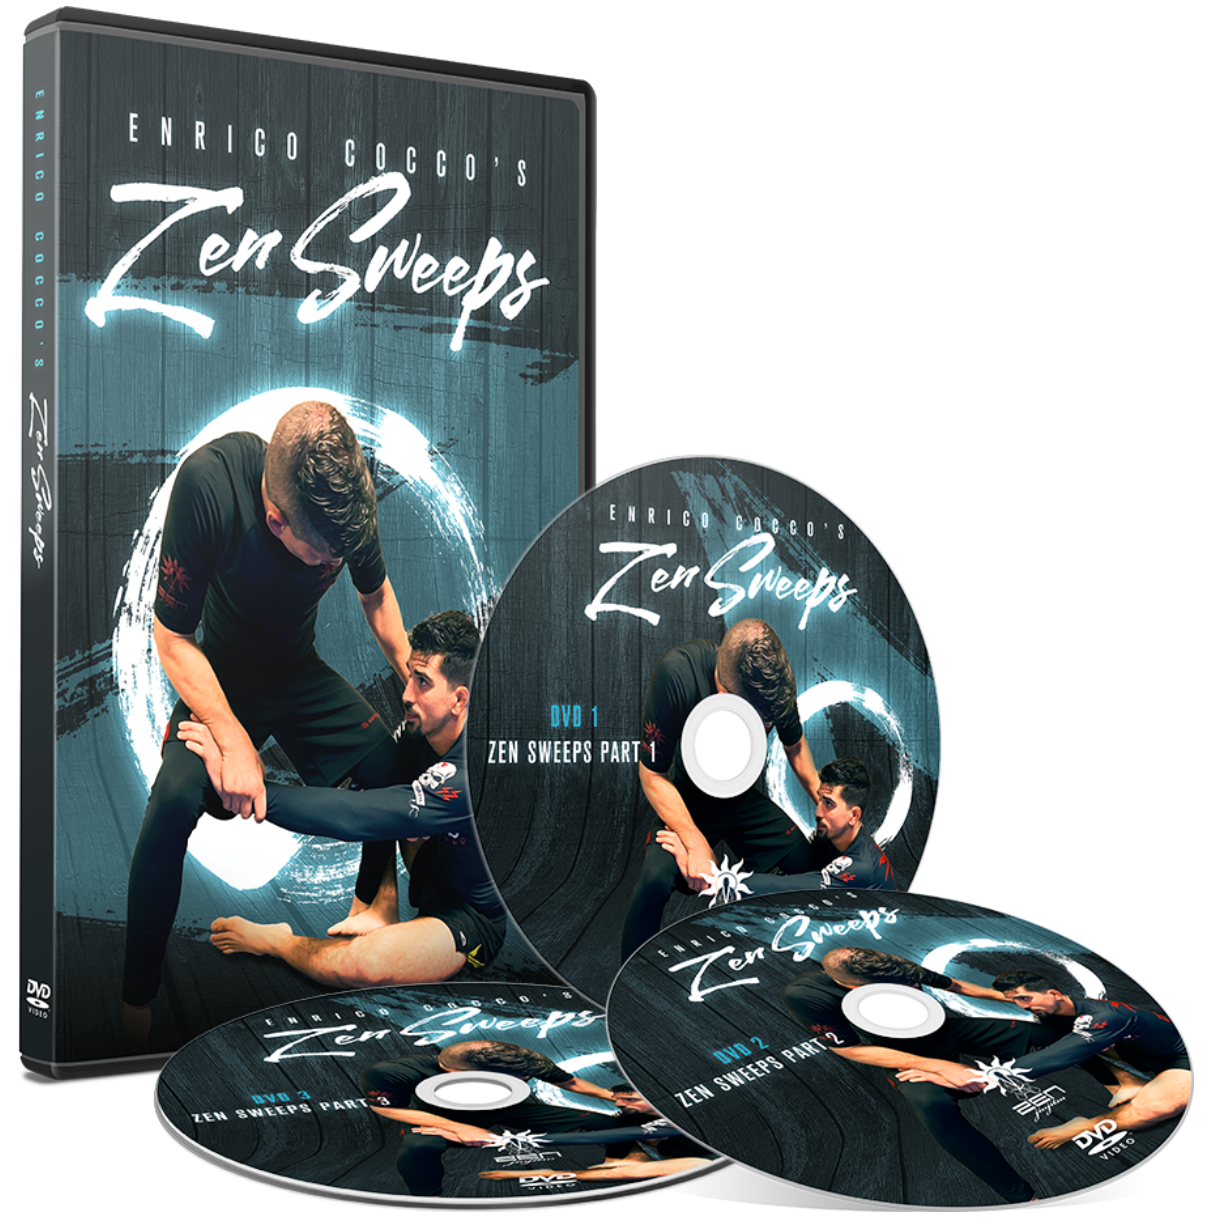 Zen Sweeps 3 DVD Set by Enrico Cocco - Budovideos Inc